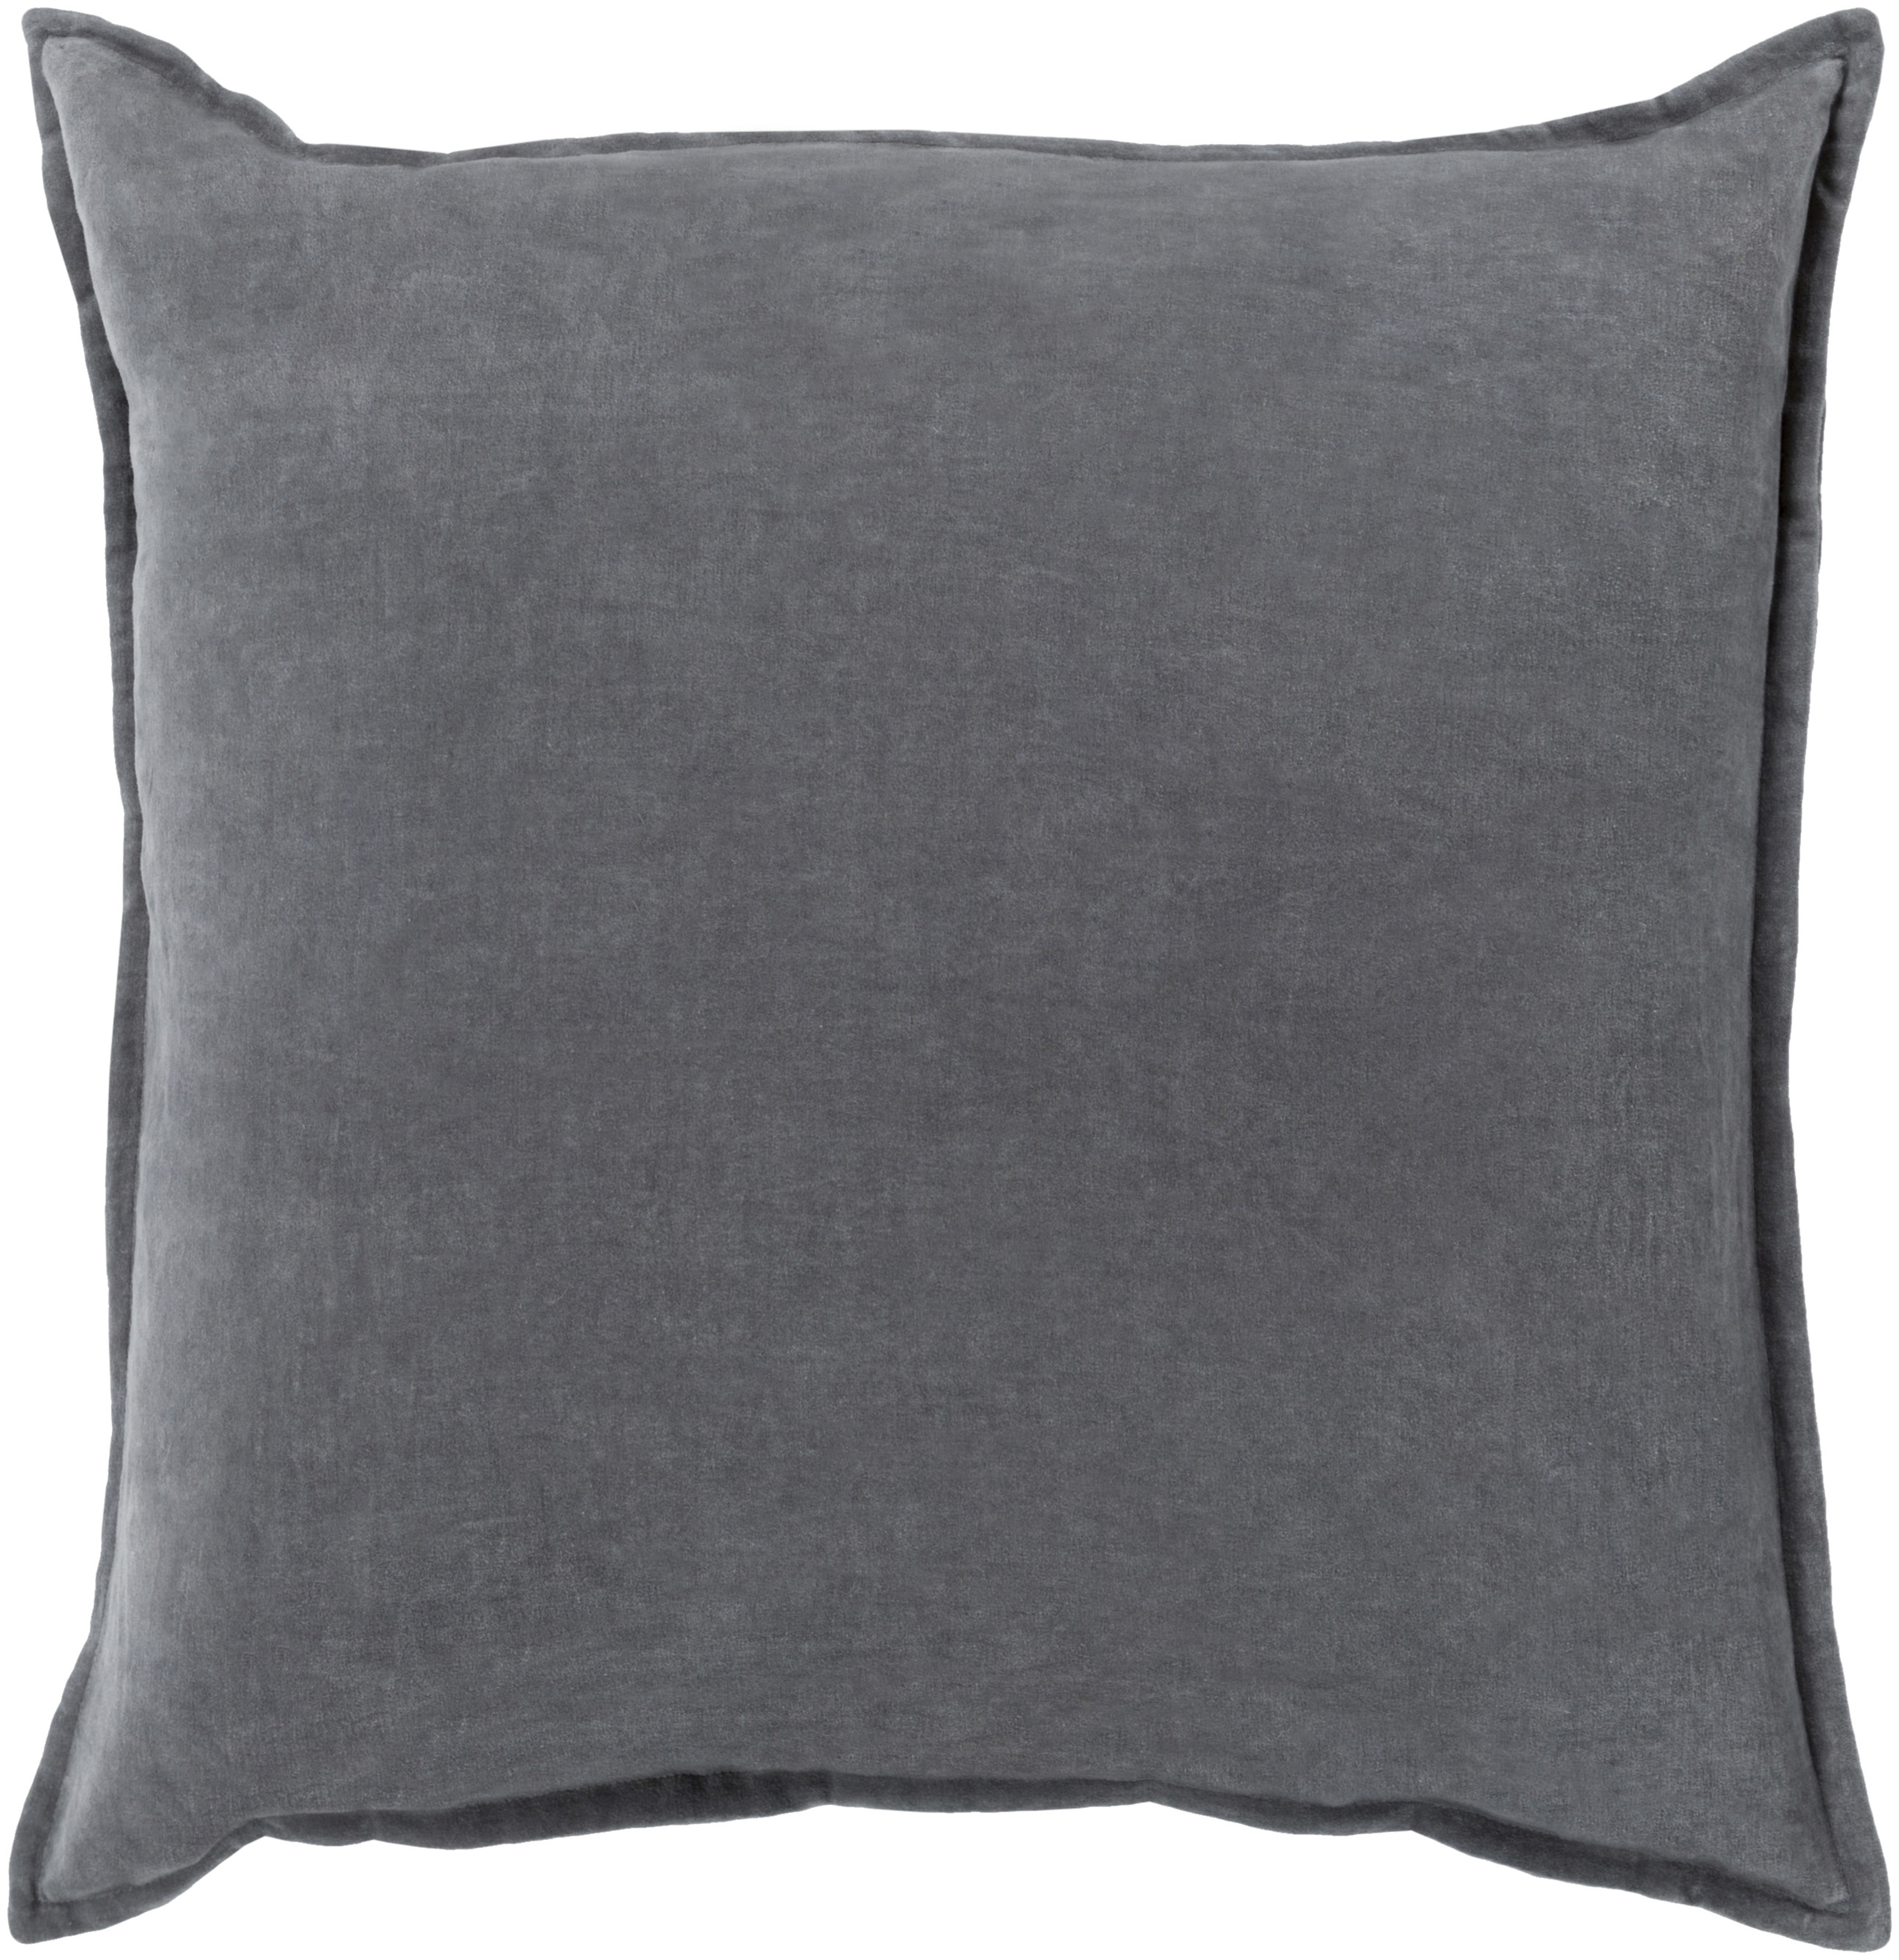 Cotton Velvet Throw Pillow, 22" x 22", with down insert - Surya